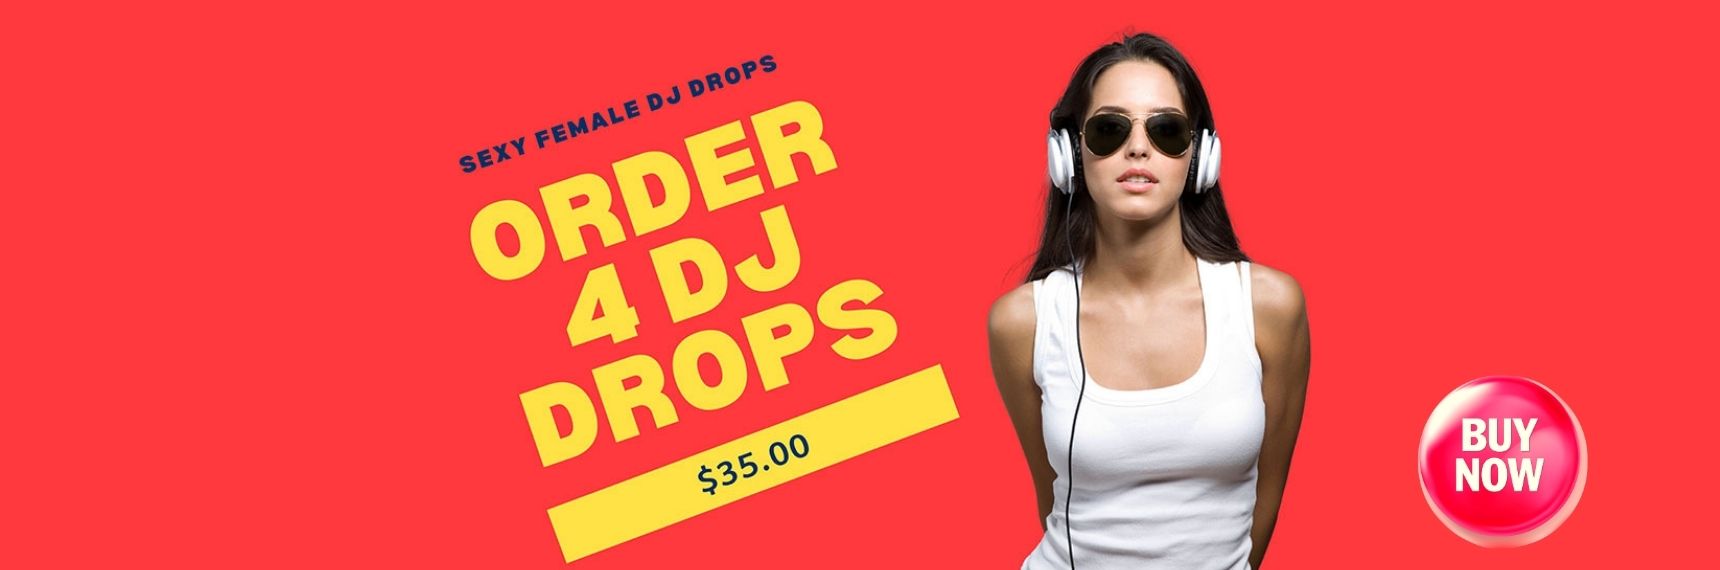 Sexy Female Dj Drop Samples